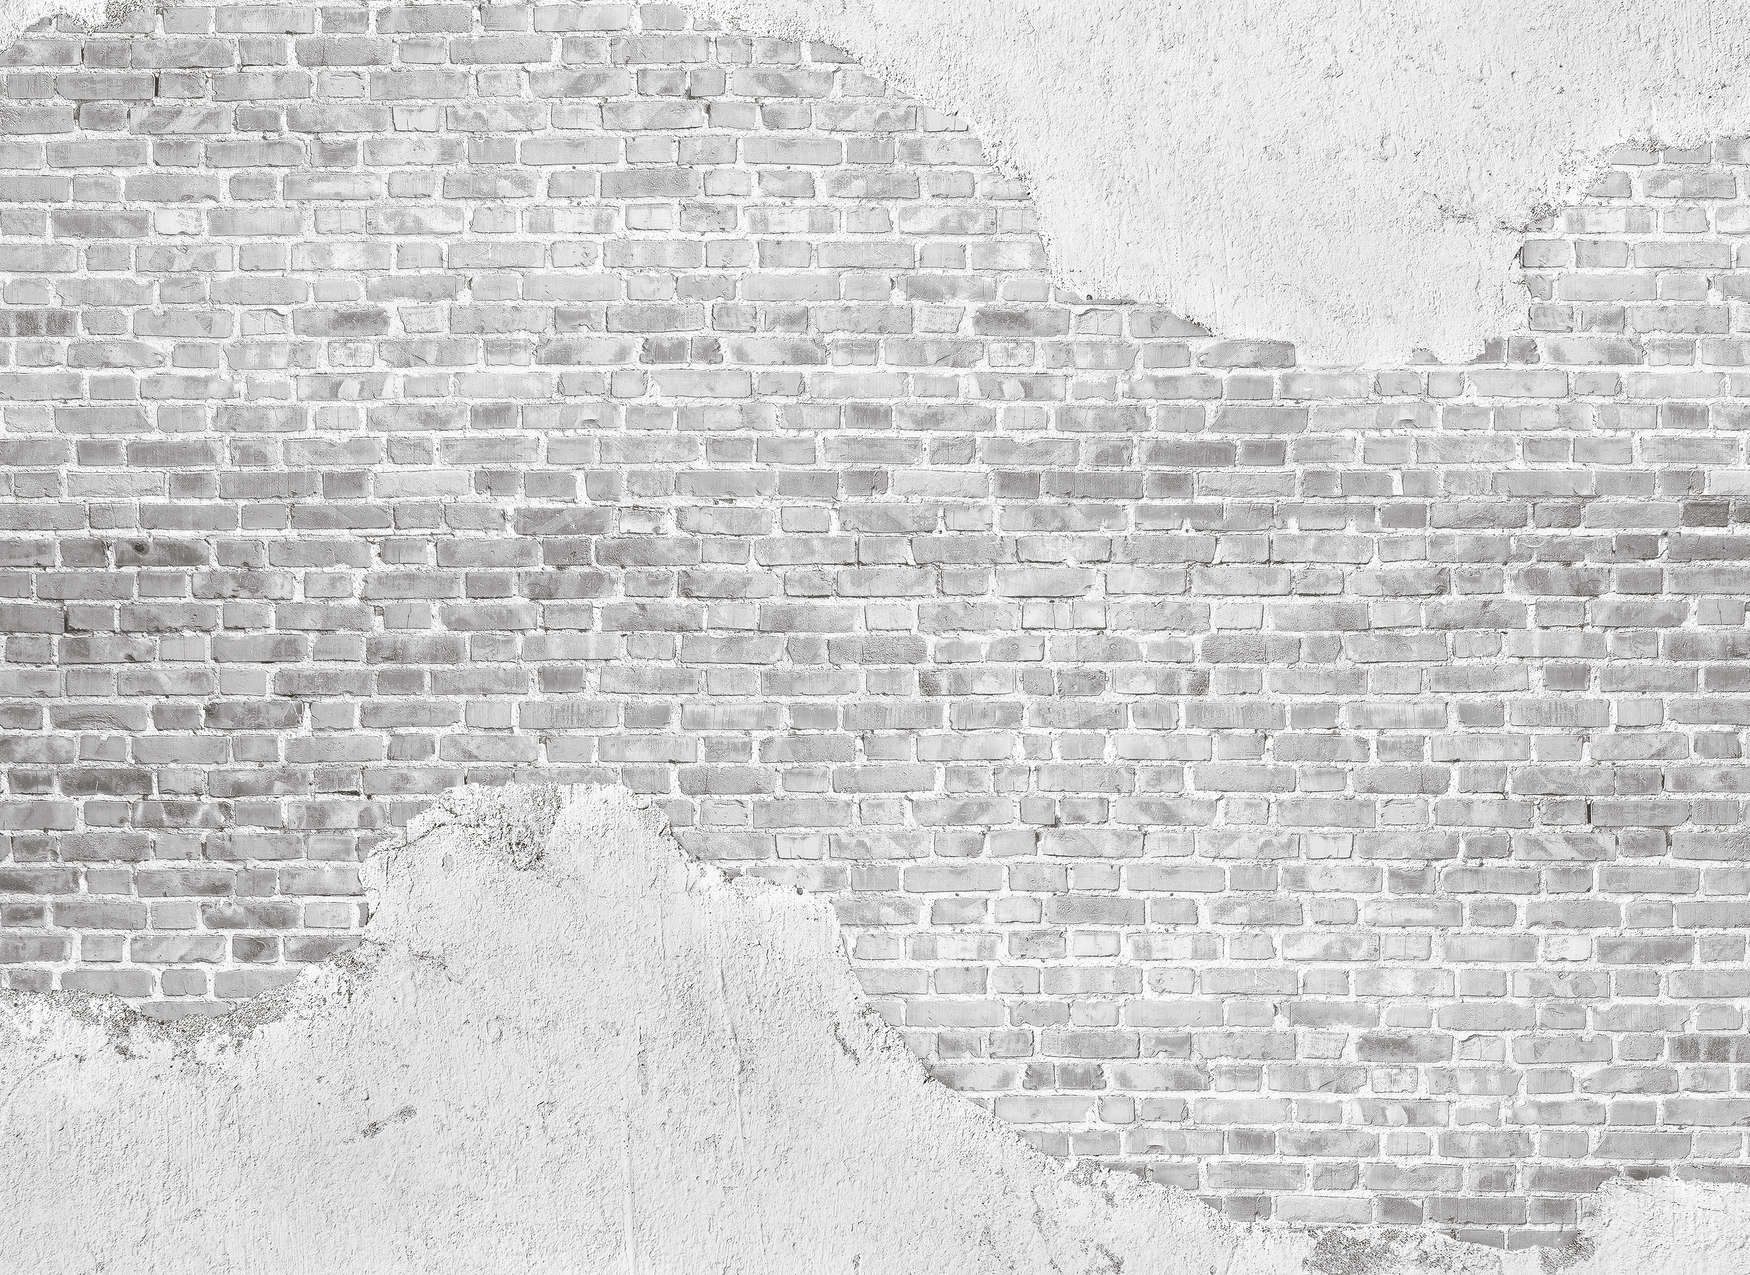             Brick wall with trendy industrial look - grey
        